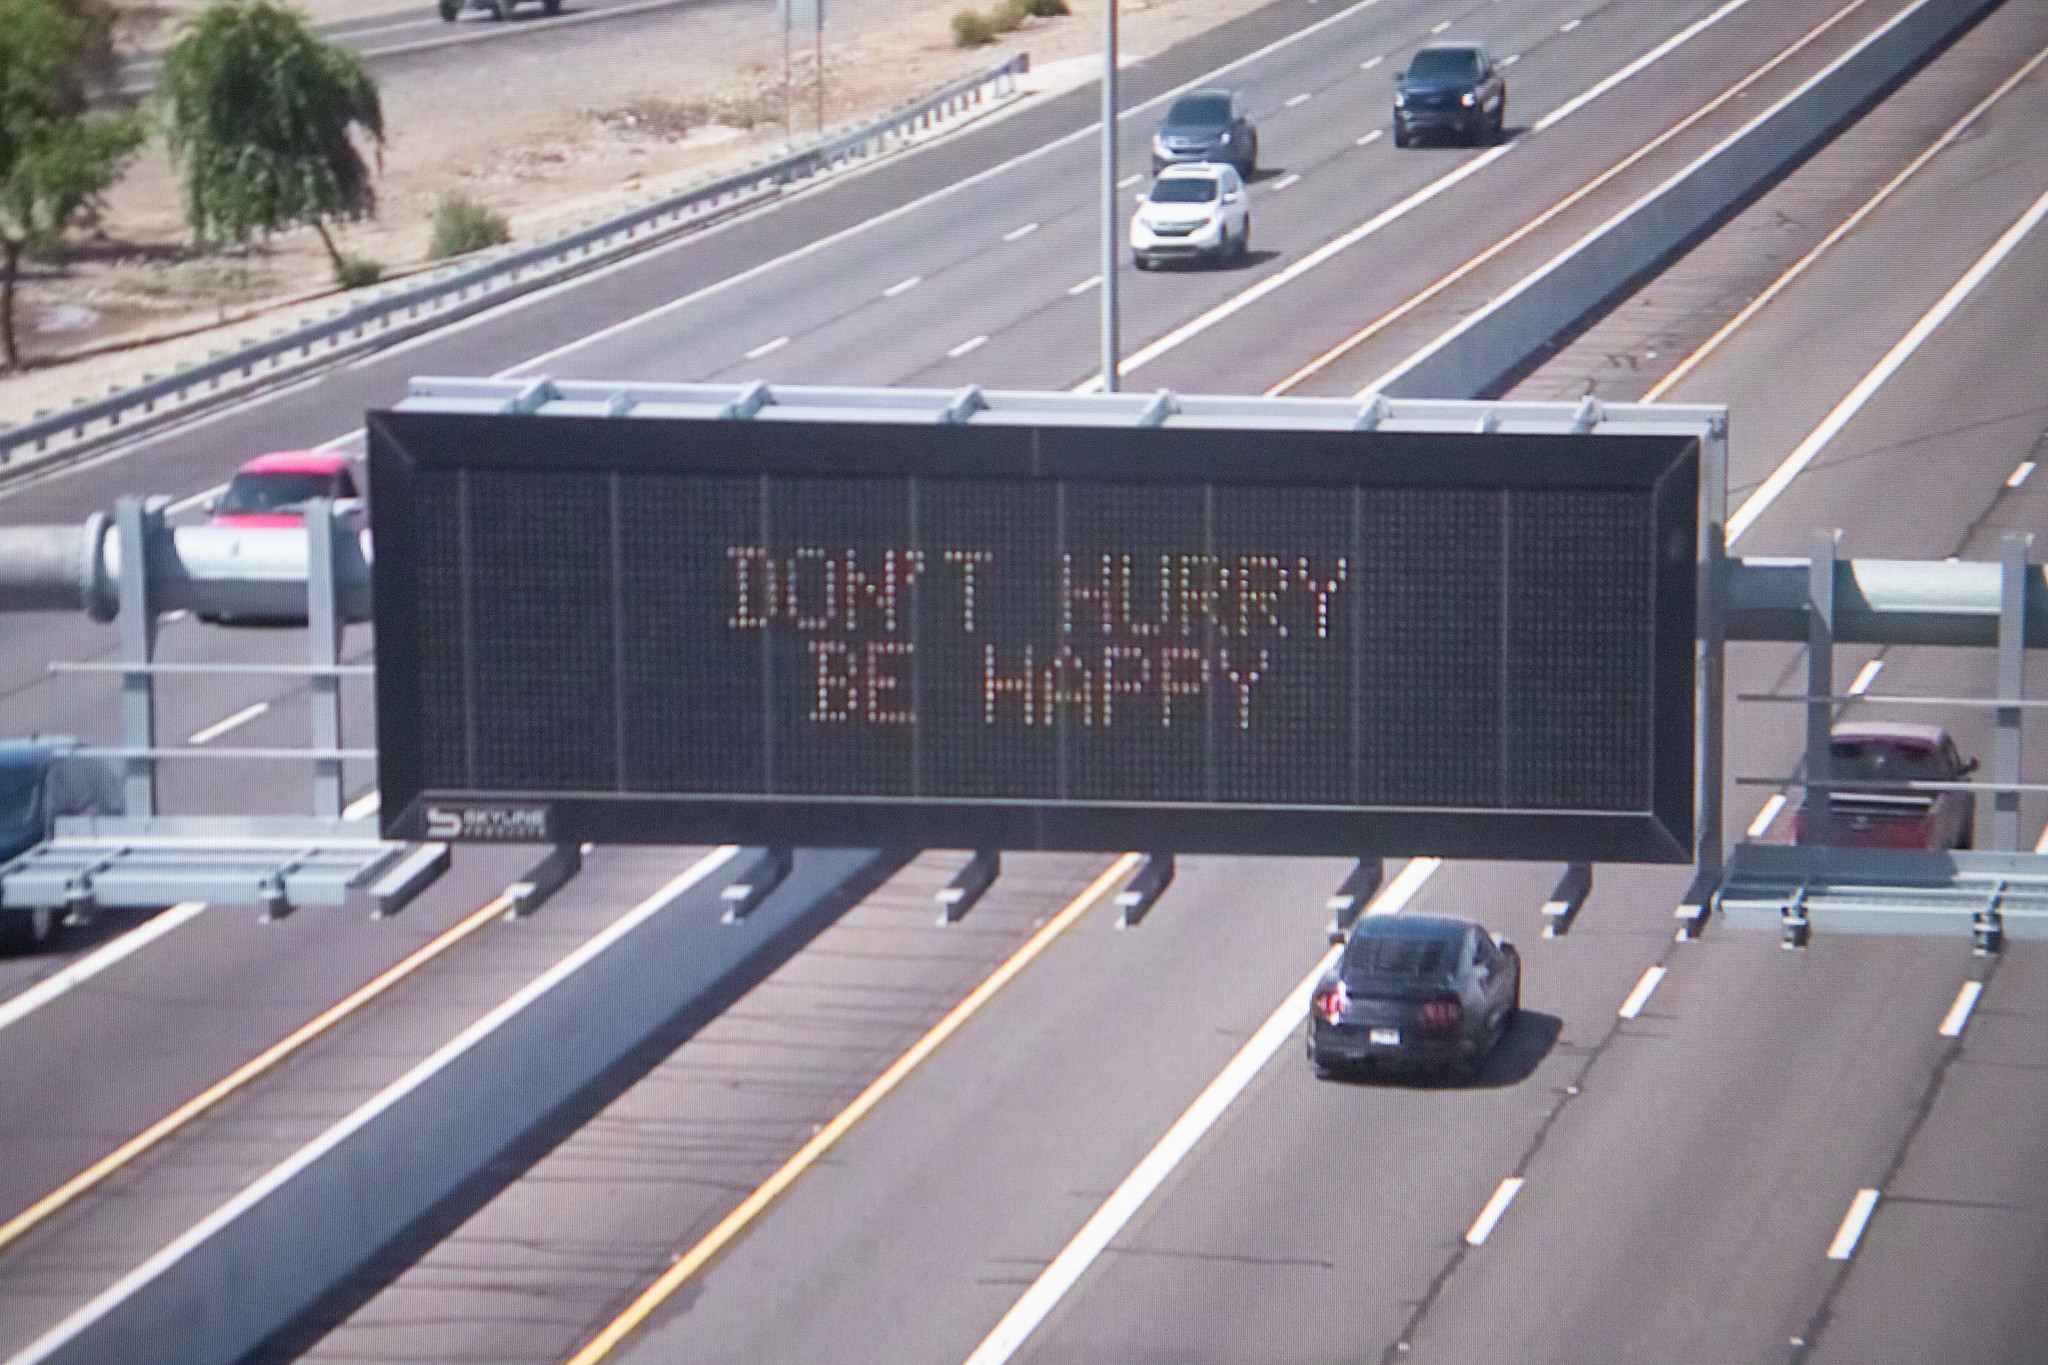 Traffic safety message